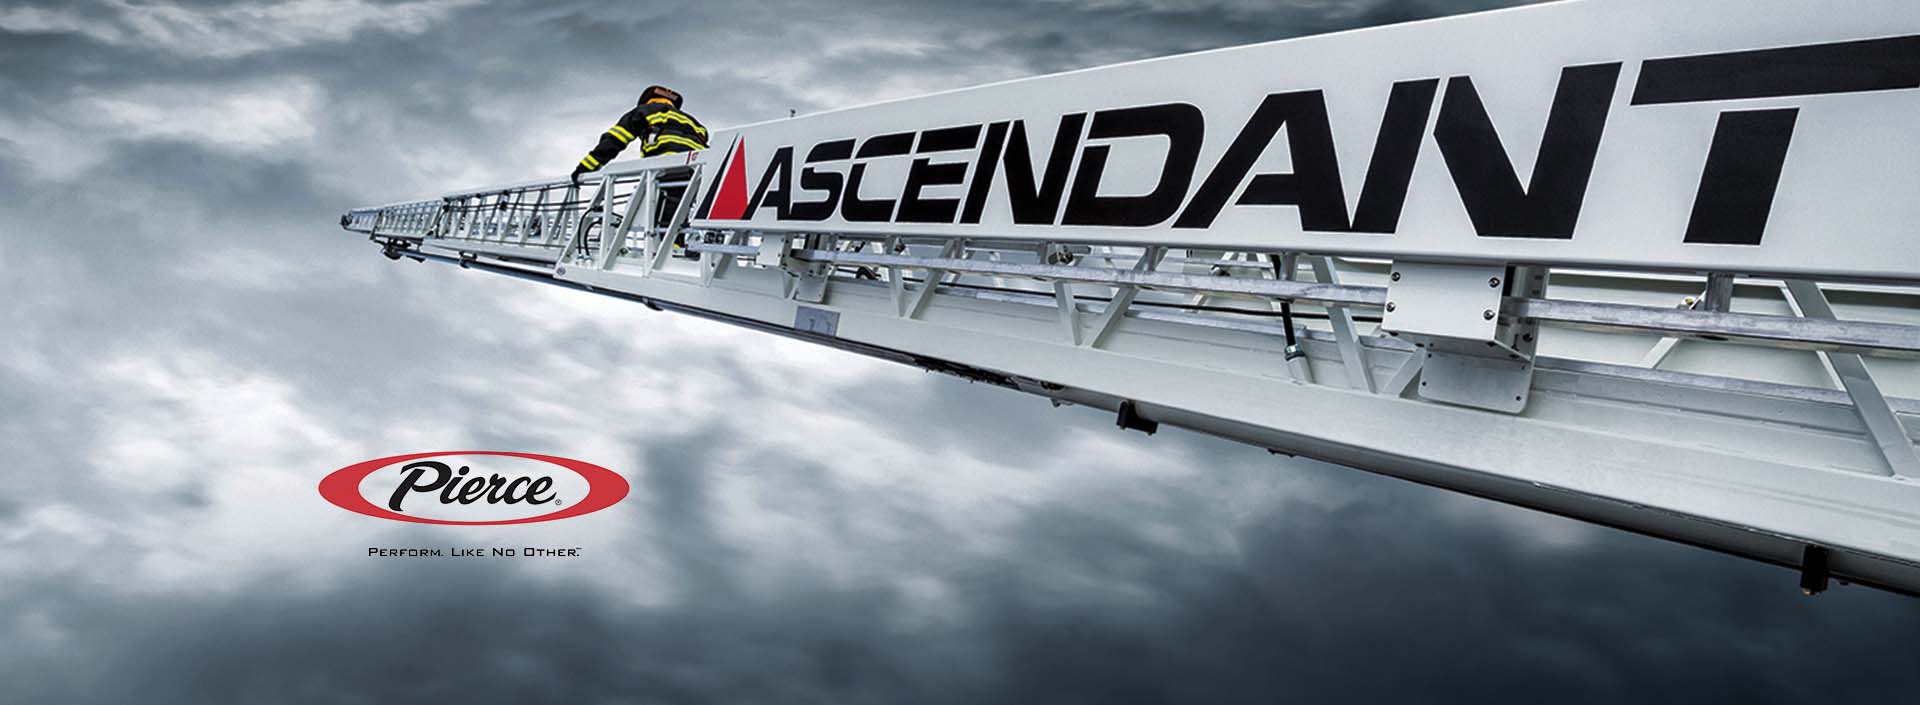 ascendant aerial ladder